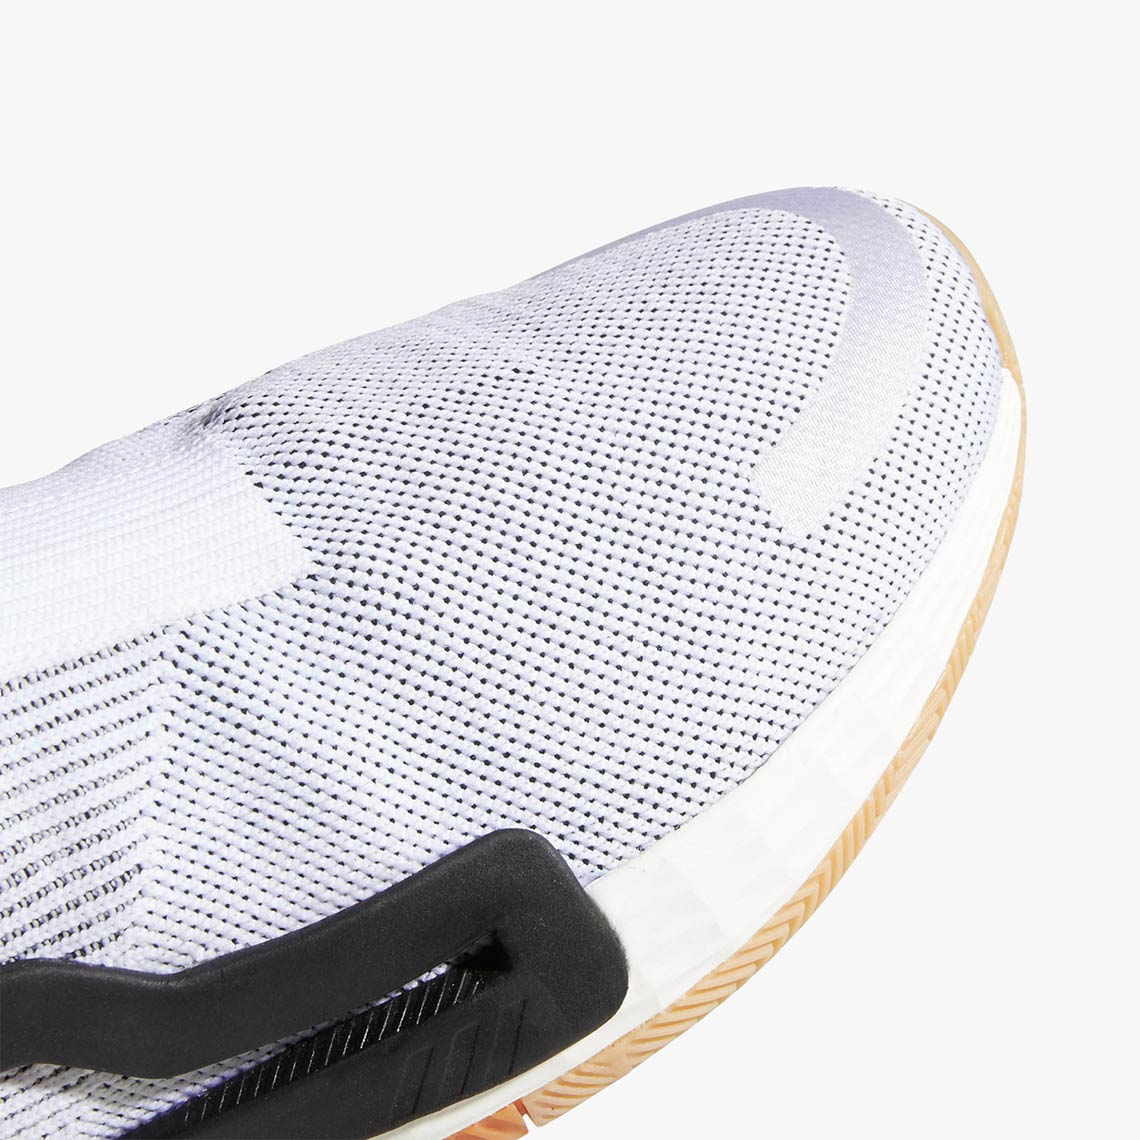 adidas sneaker next level white black gum f36272 4